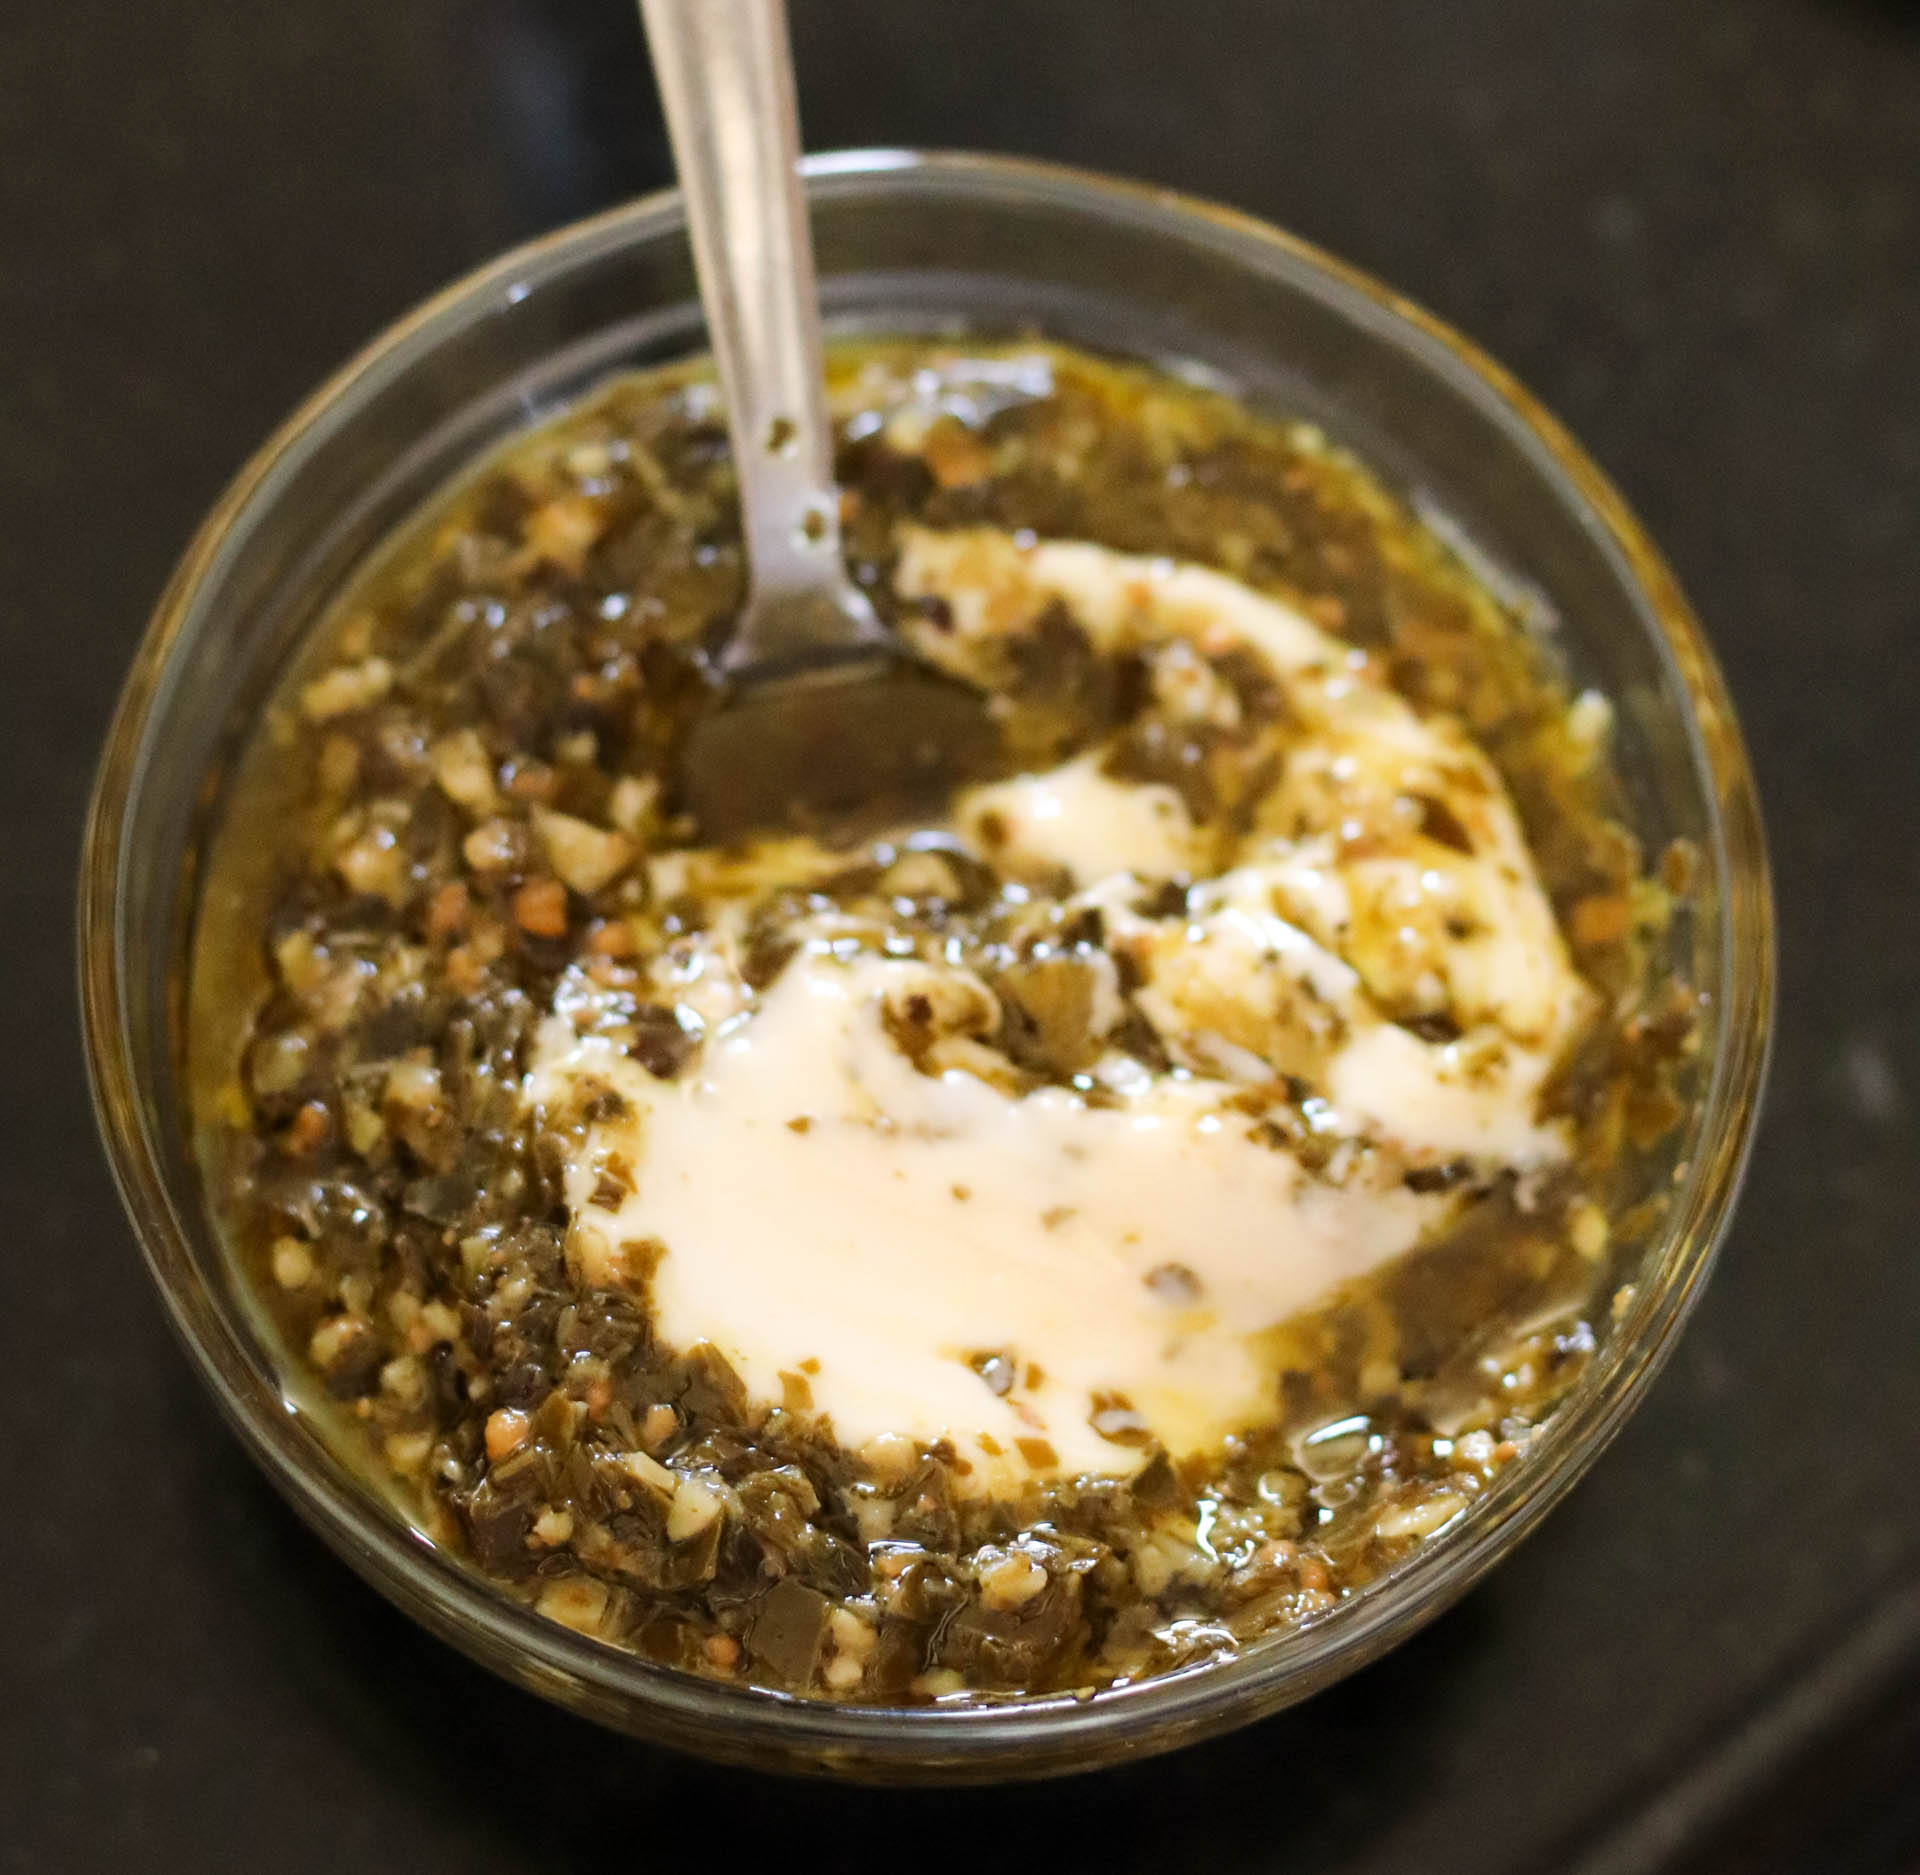 Pesto mixture in small glass bowl